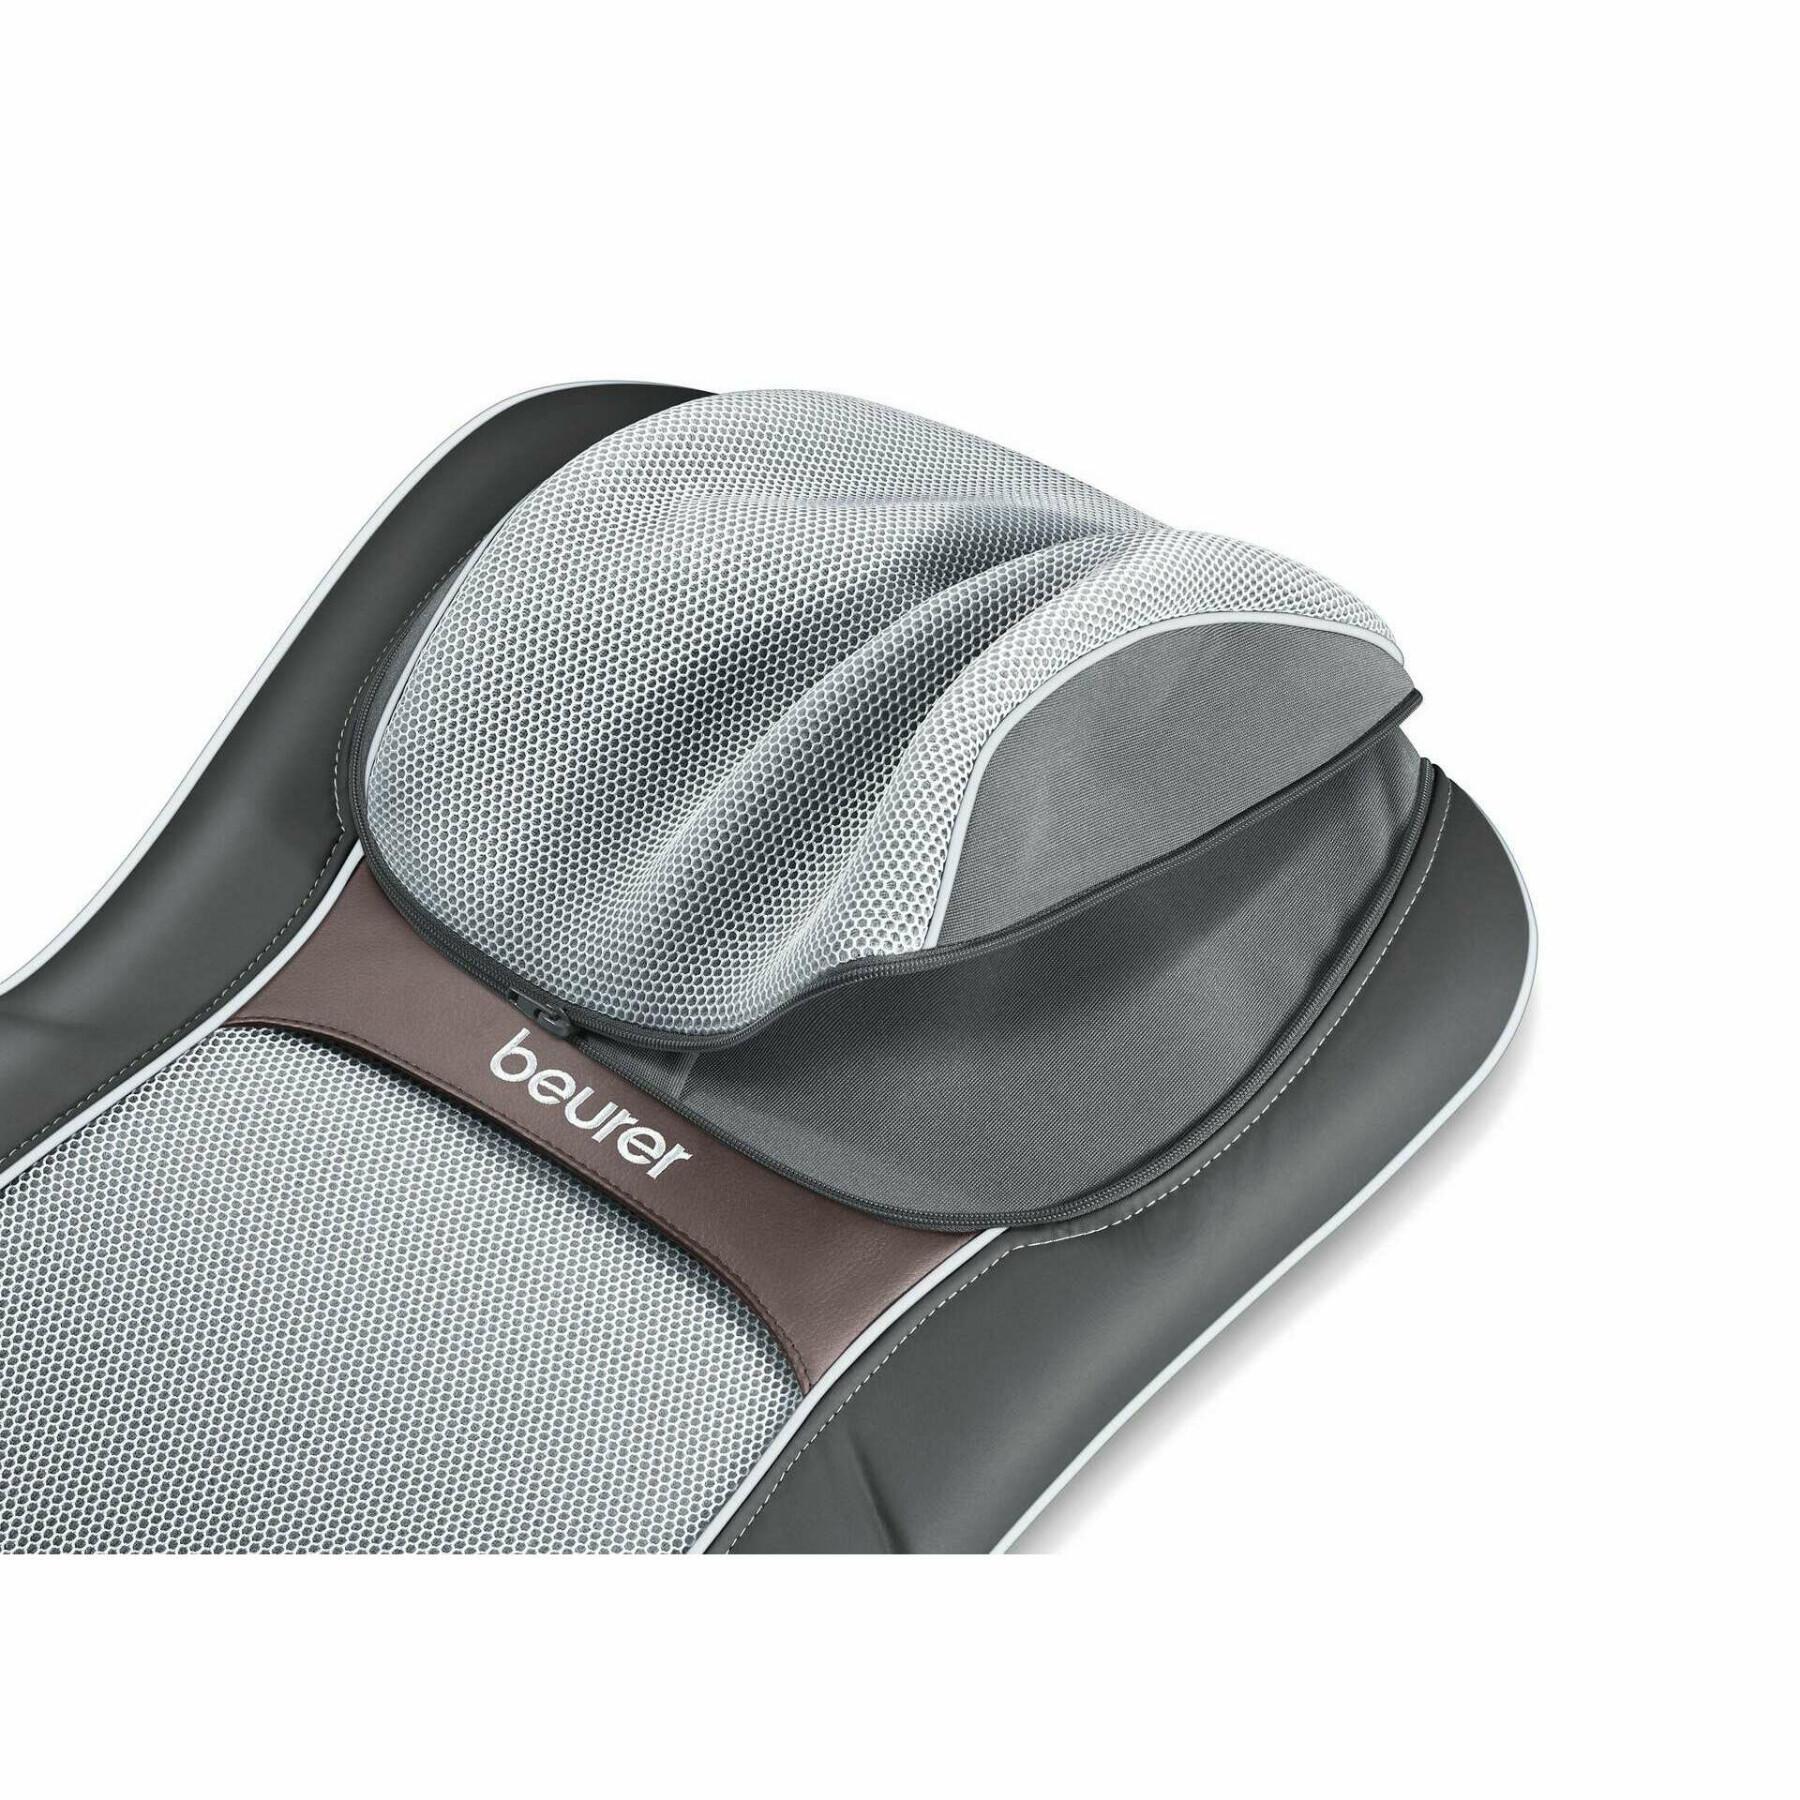 Massage seat cover Beurer Shiatsu MG 295